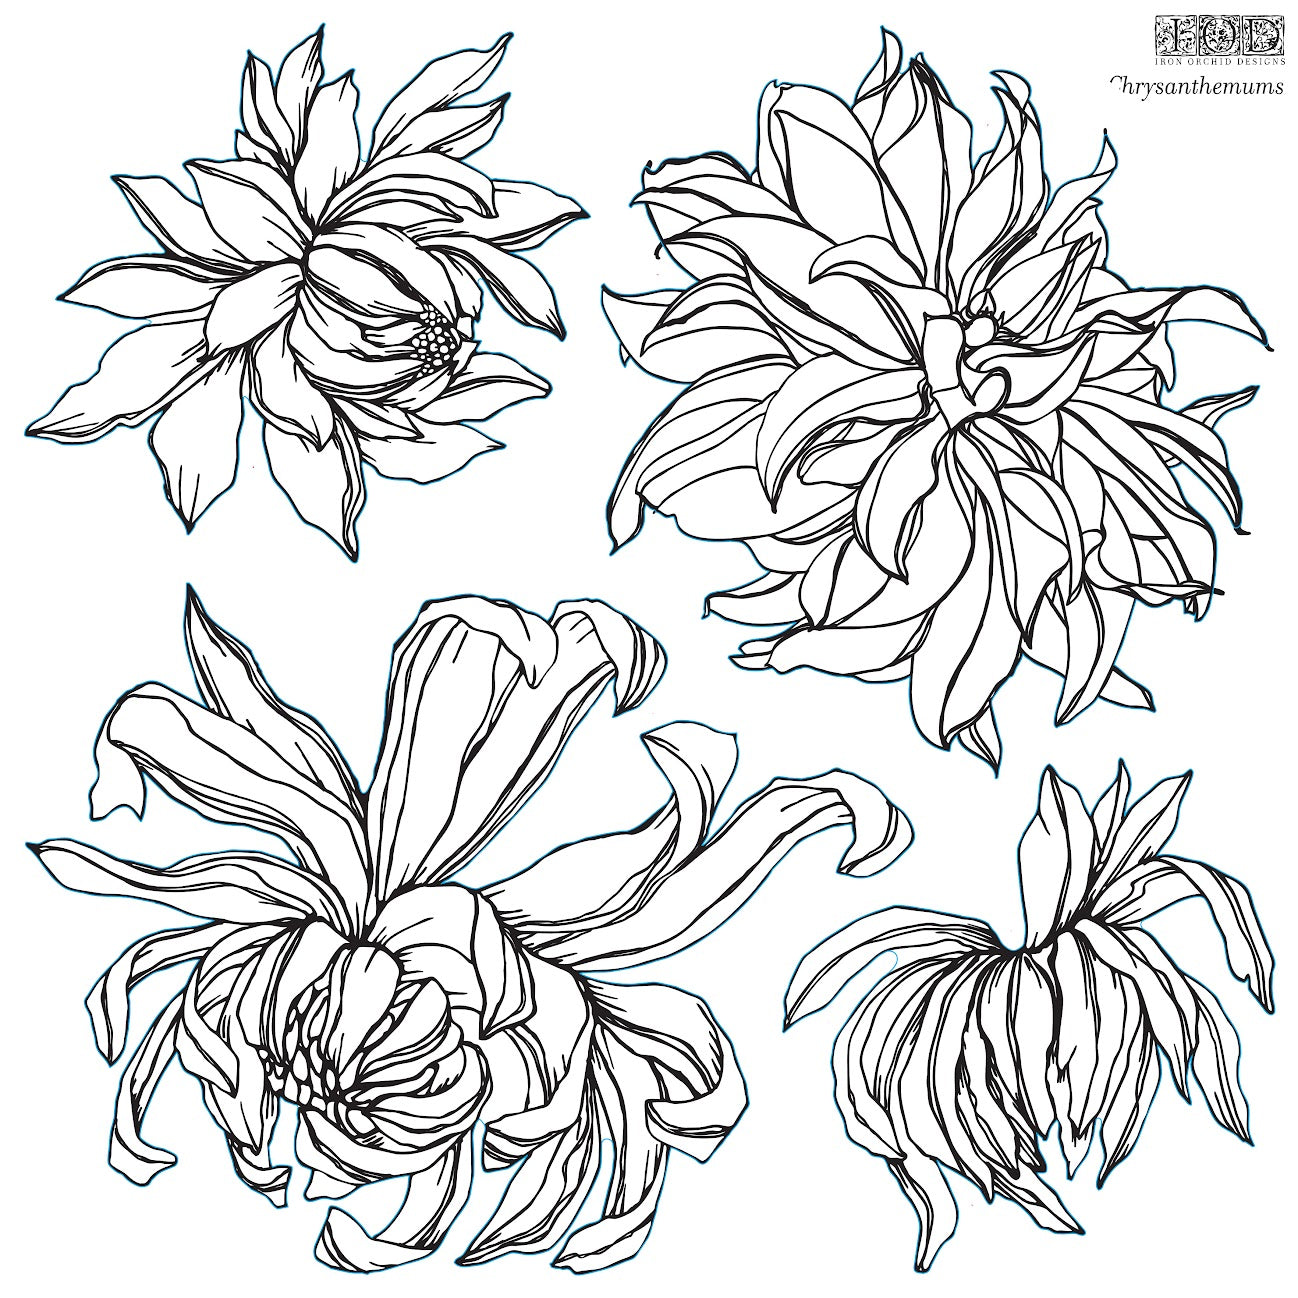 IOD Stamp Chrysanthemum